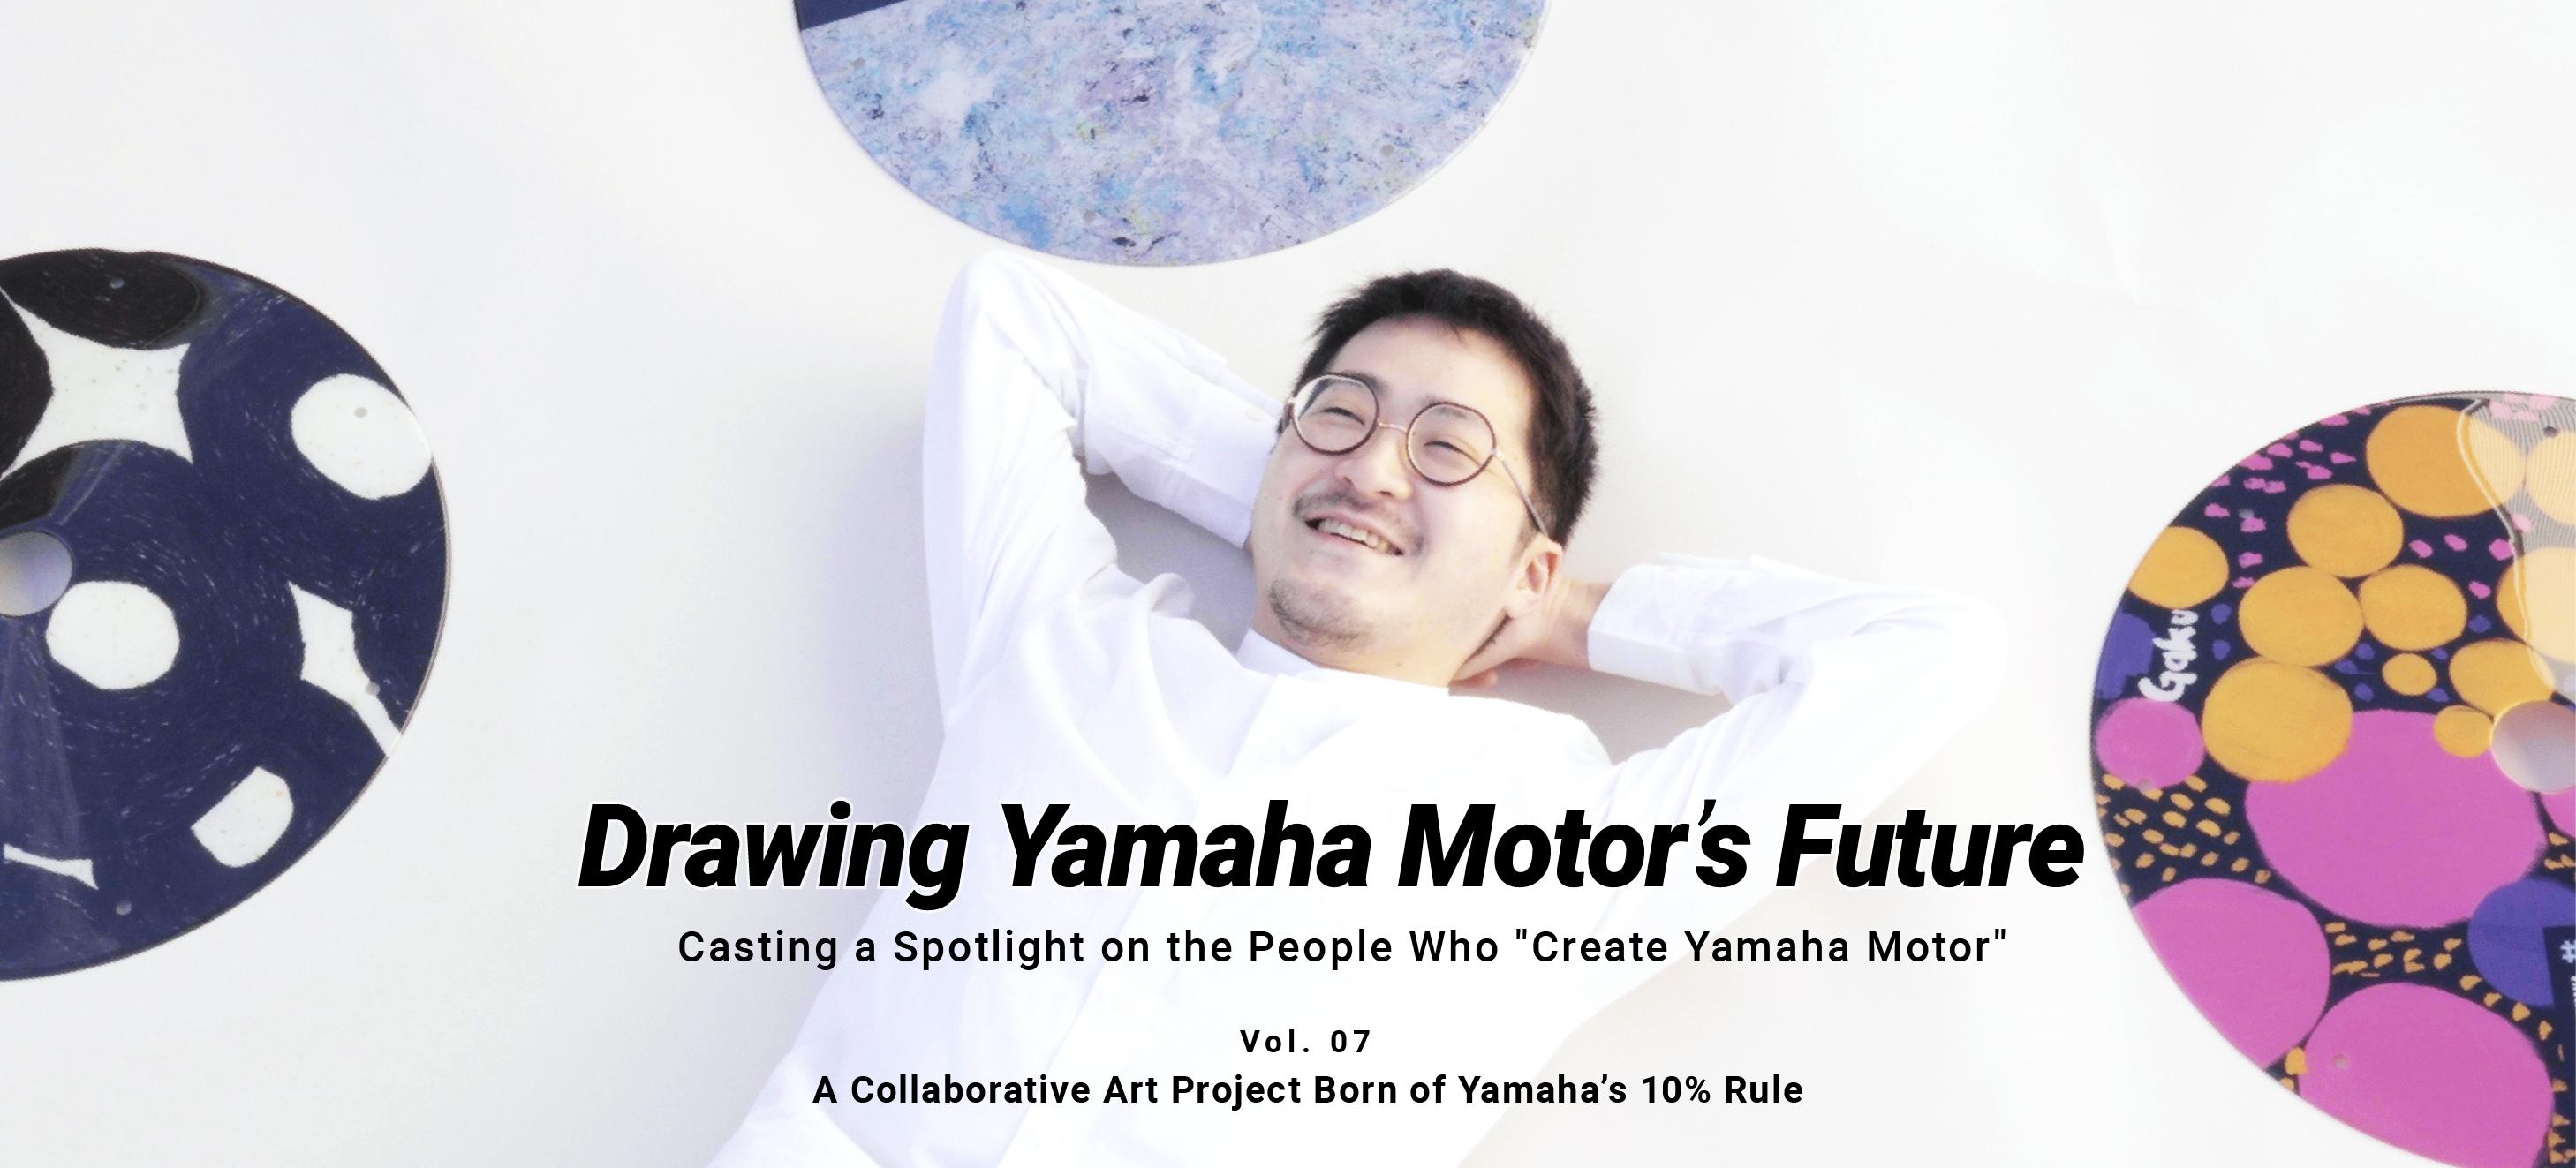 Drawing Yamaha Motor’s Future Vol. 07 Ryosuke Imamura A Collaborative Art Project Born of Yamaha’s 10% Rule